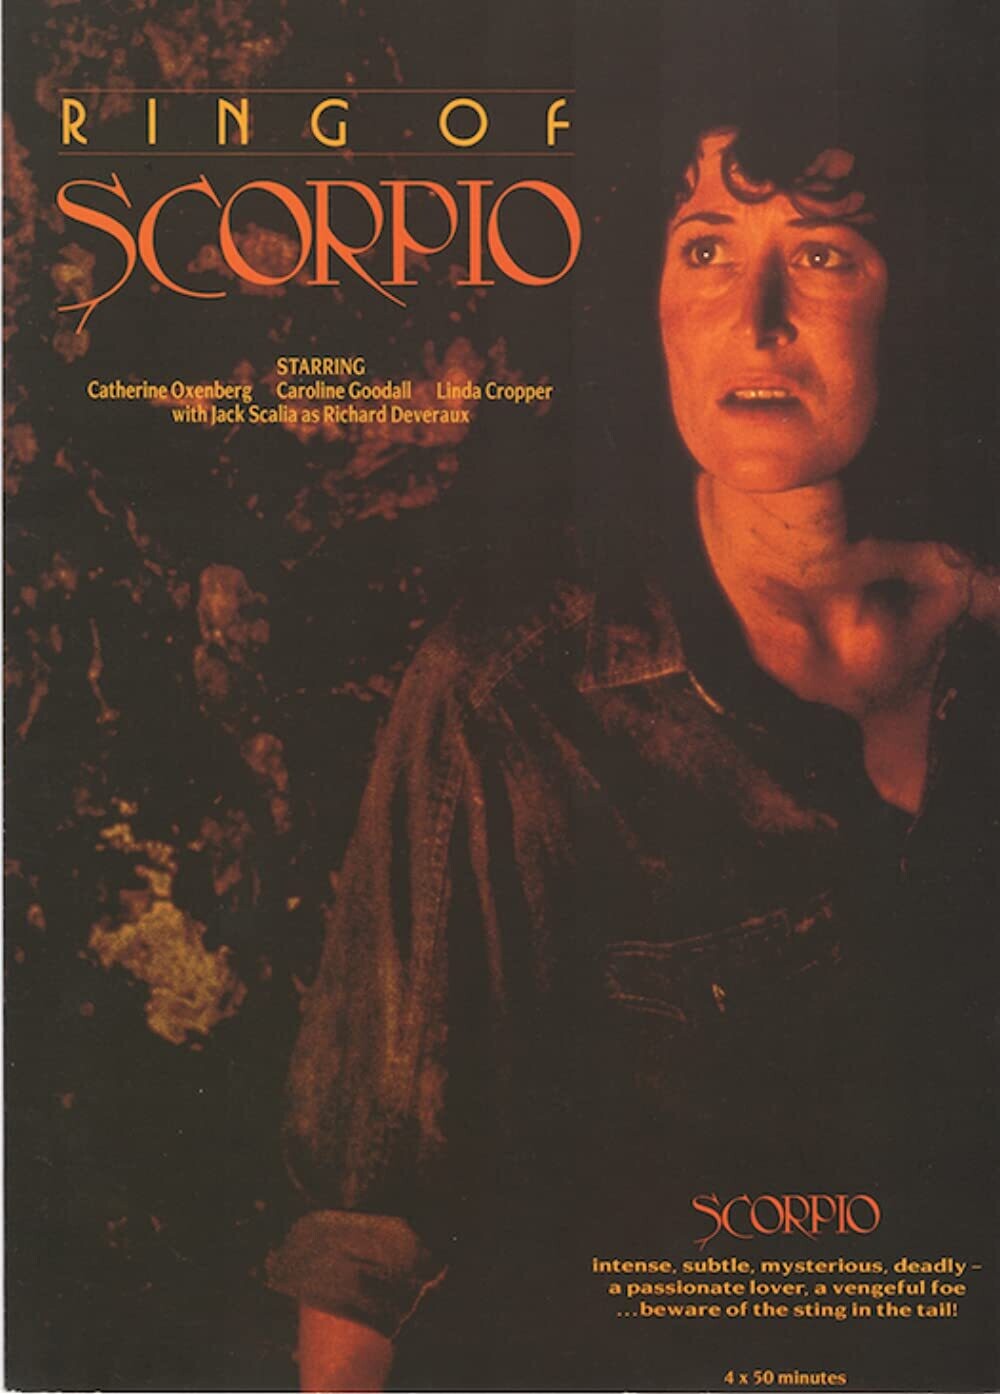 Ring Of Scorpio DVD - (1990) - Caroline Goodall, Linda Cropper, Catherine Oxenbers